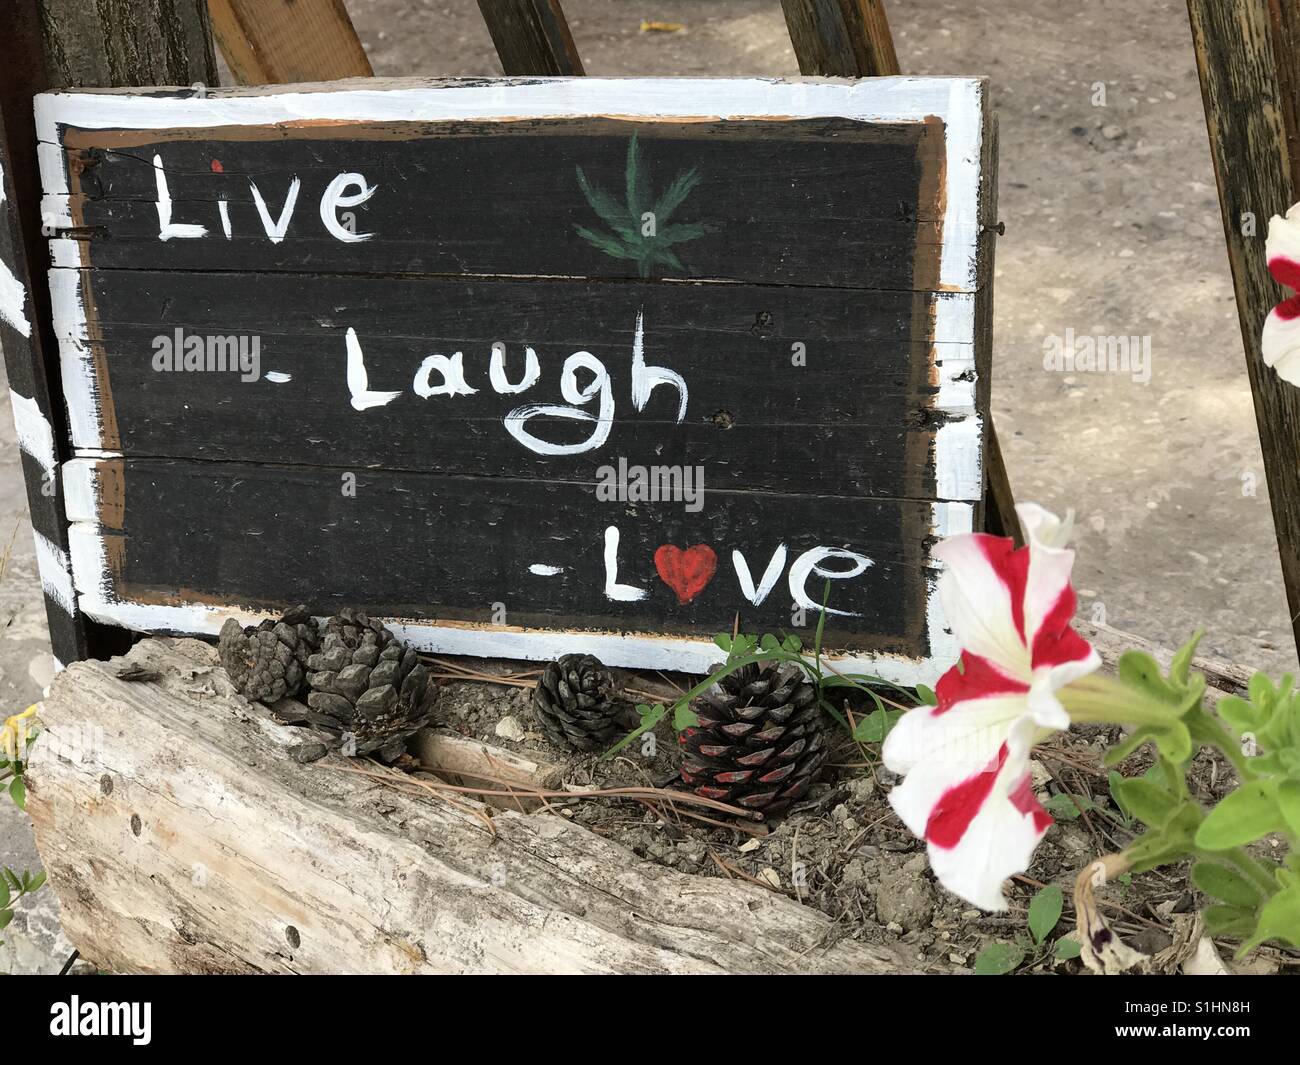 Live, laugh, love Stock Photo